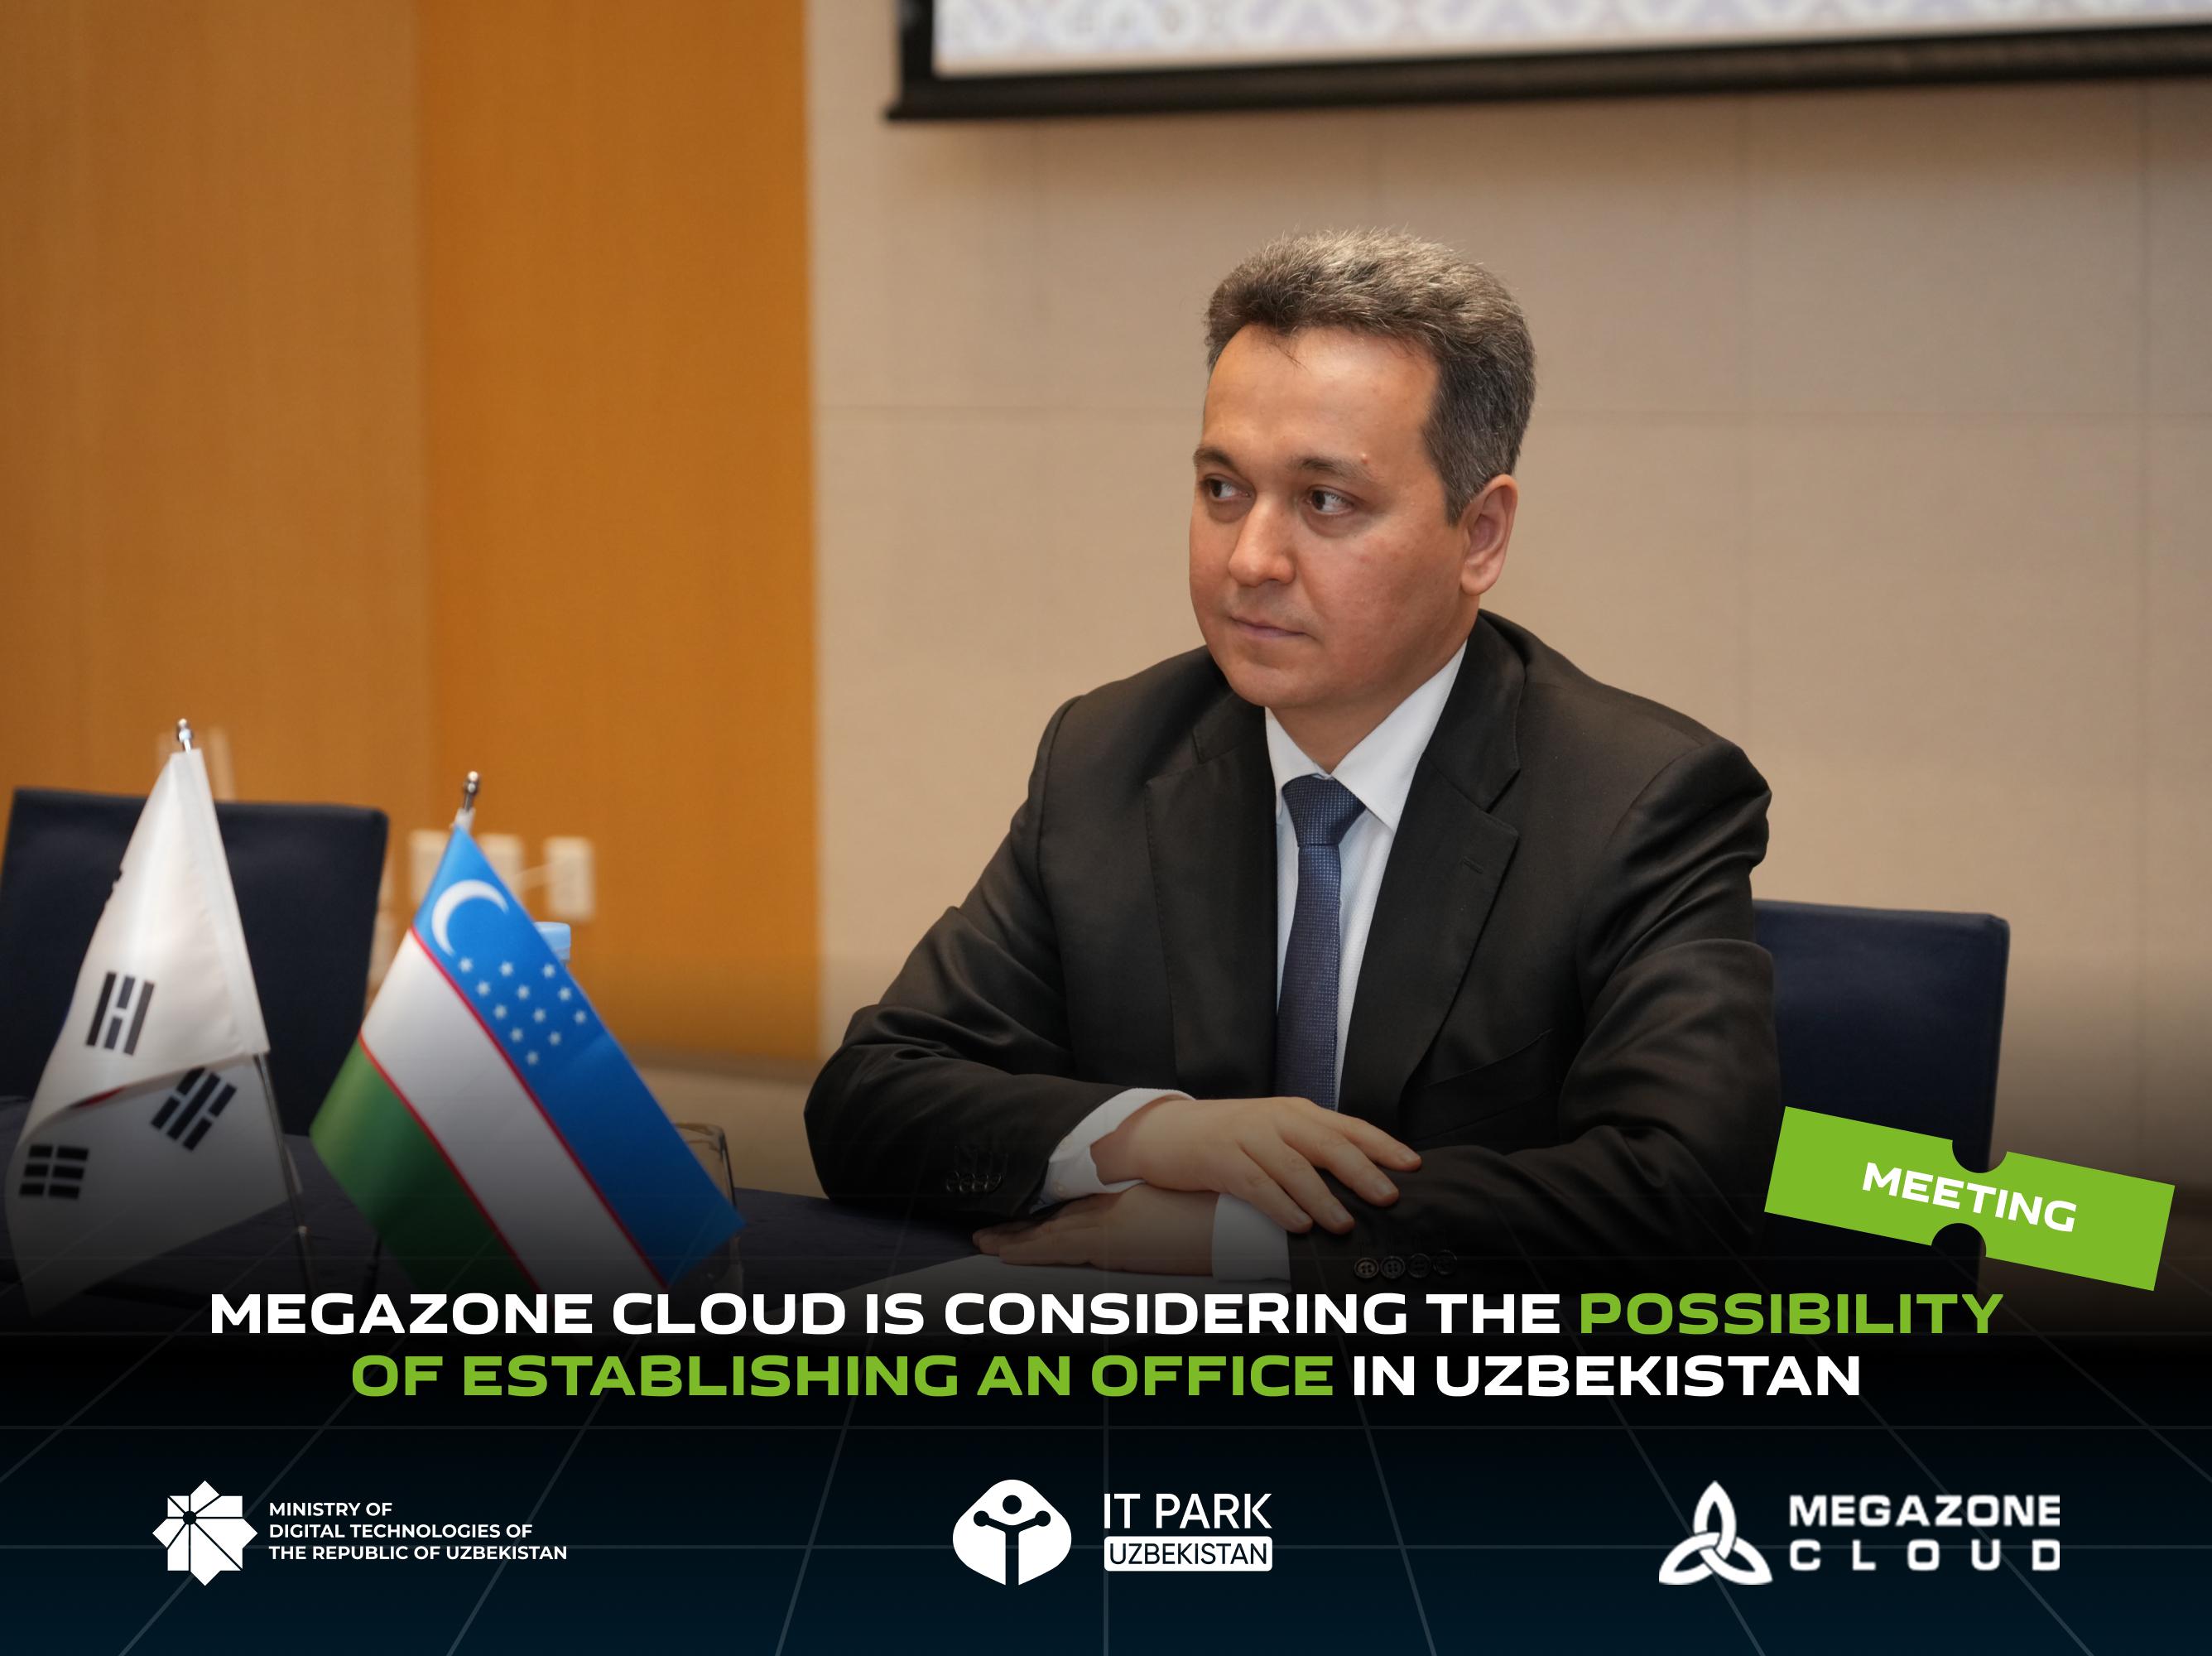 Megazone Cloud is considering the possibility of establishing an office in Uzbekistan